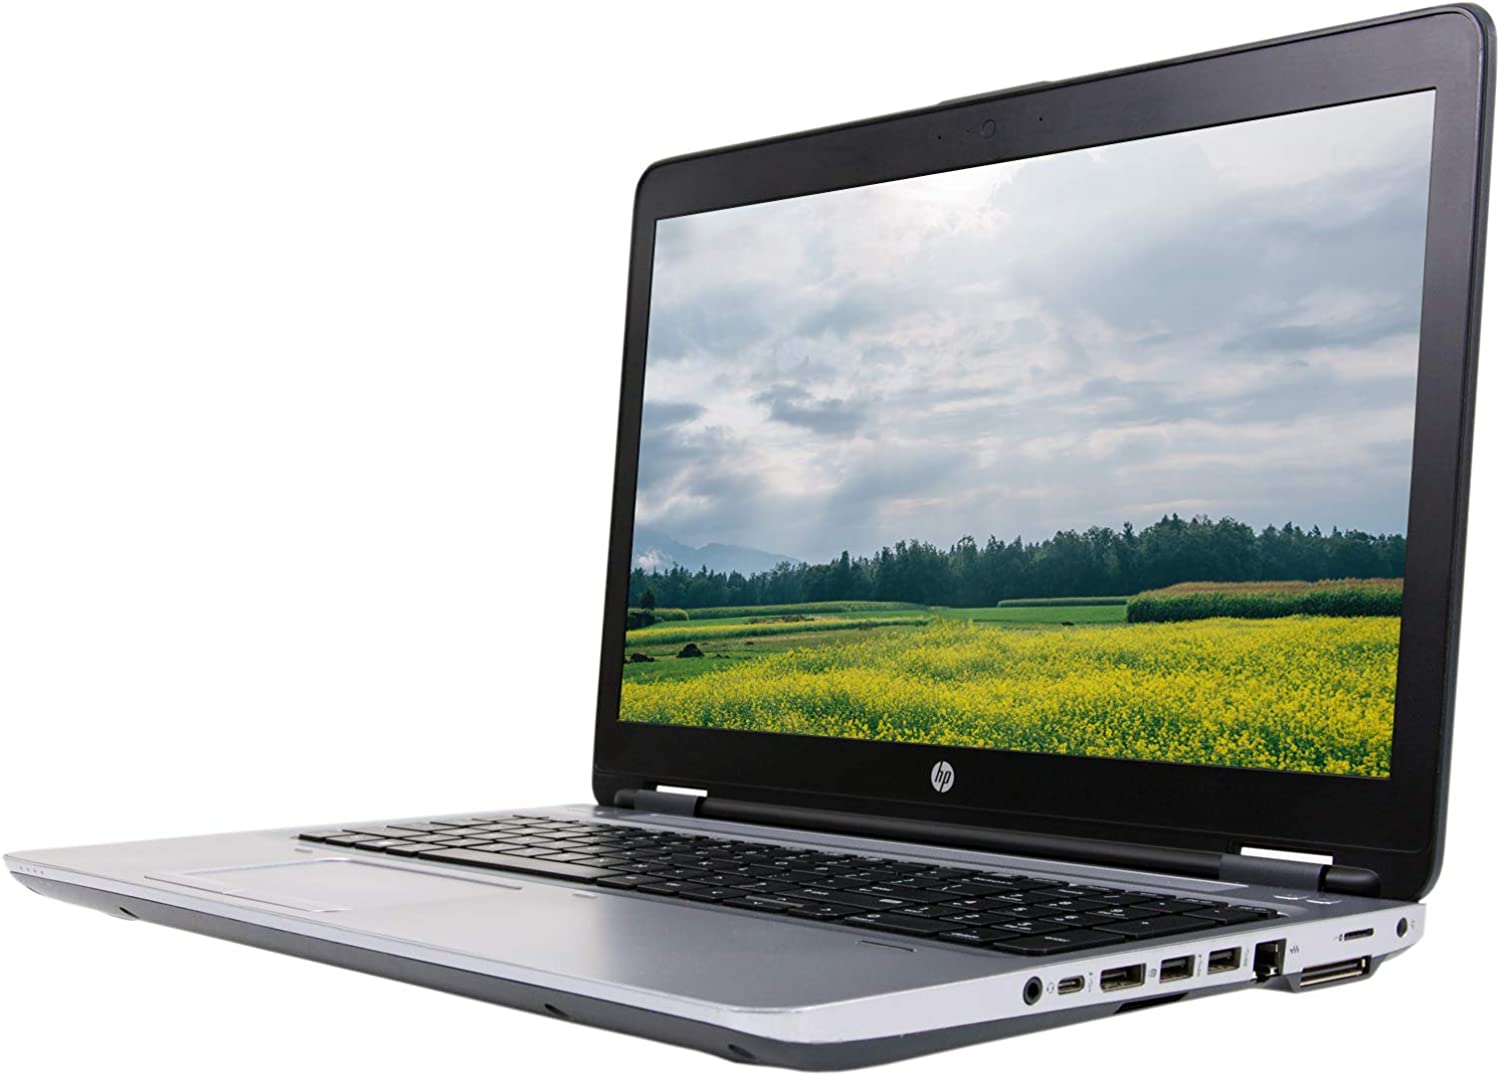 HP Probook 640 G3 Core i5 ,7200U 2.5GHz upto 3.1GHz, 14 inches display Windows 10 Pro(Renewed)